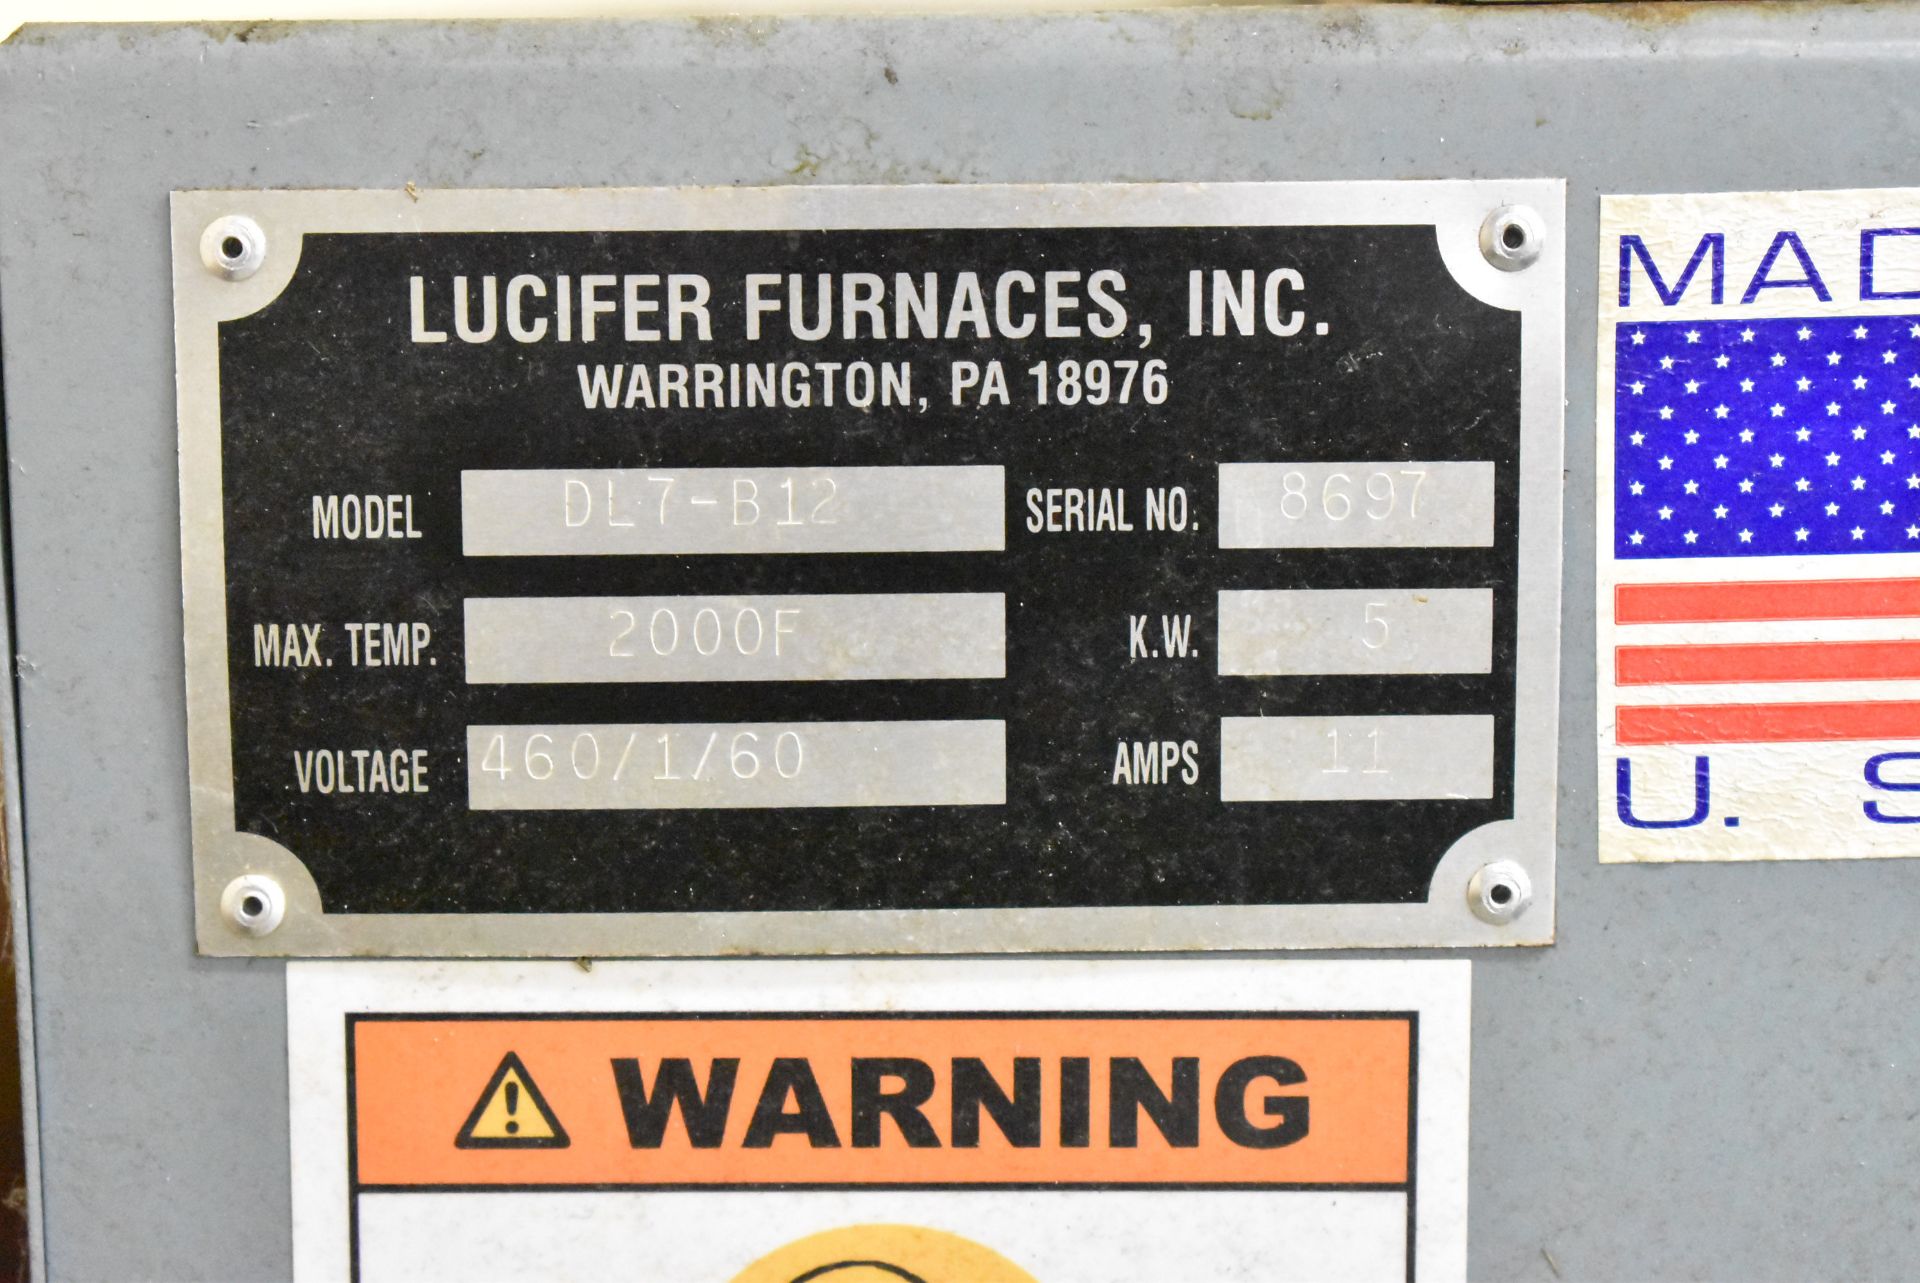 LUCIFER DL7-B12 ELECTRIC BOX FURNACE WITH 2000 DEG. F. MAX. TEMPERATURE, HONEYWELL DIGITAL - Image 4 of 4